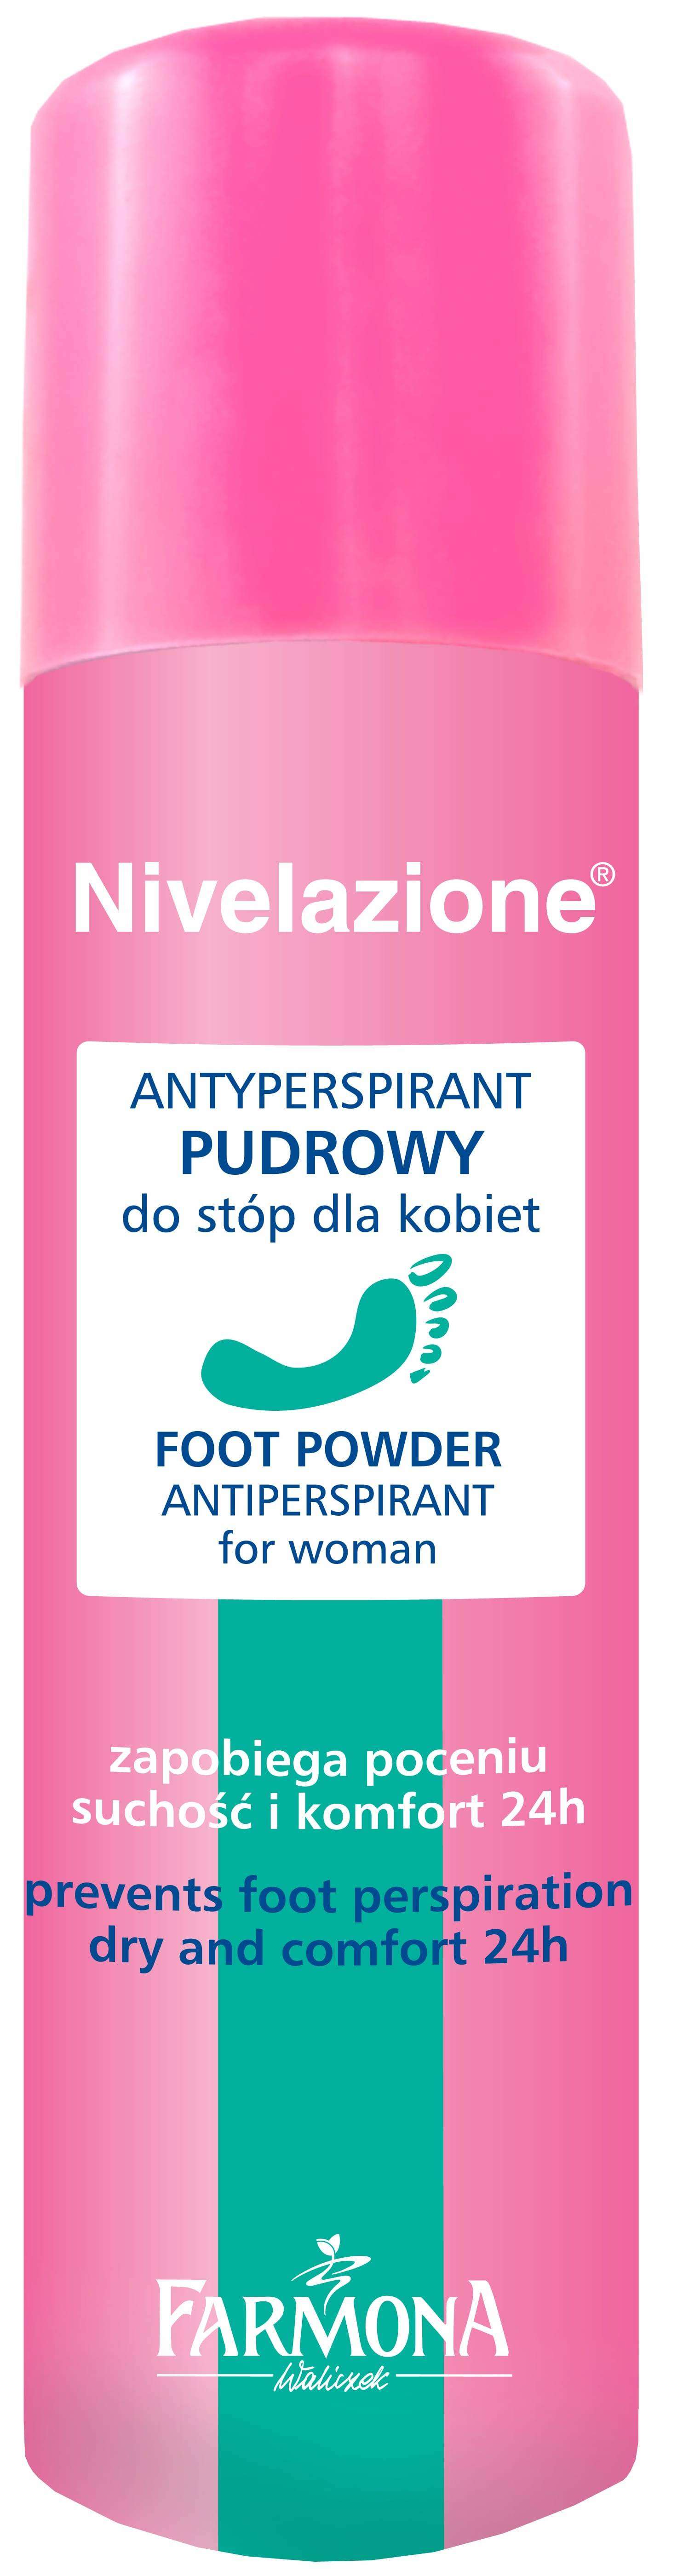 dezodorant_pudrowy